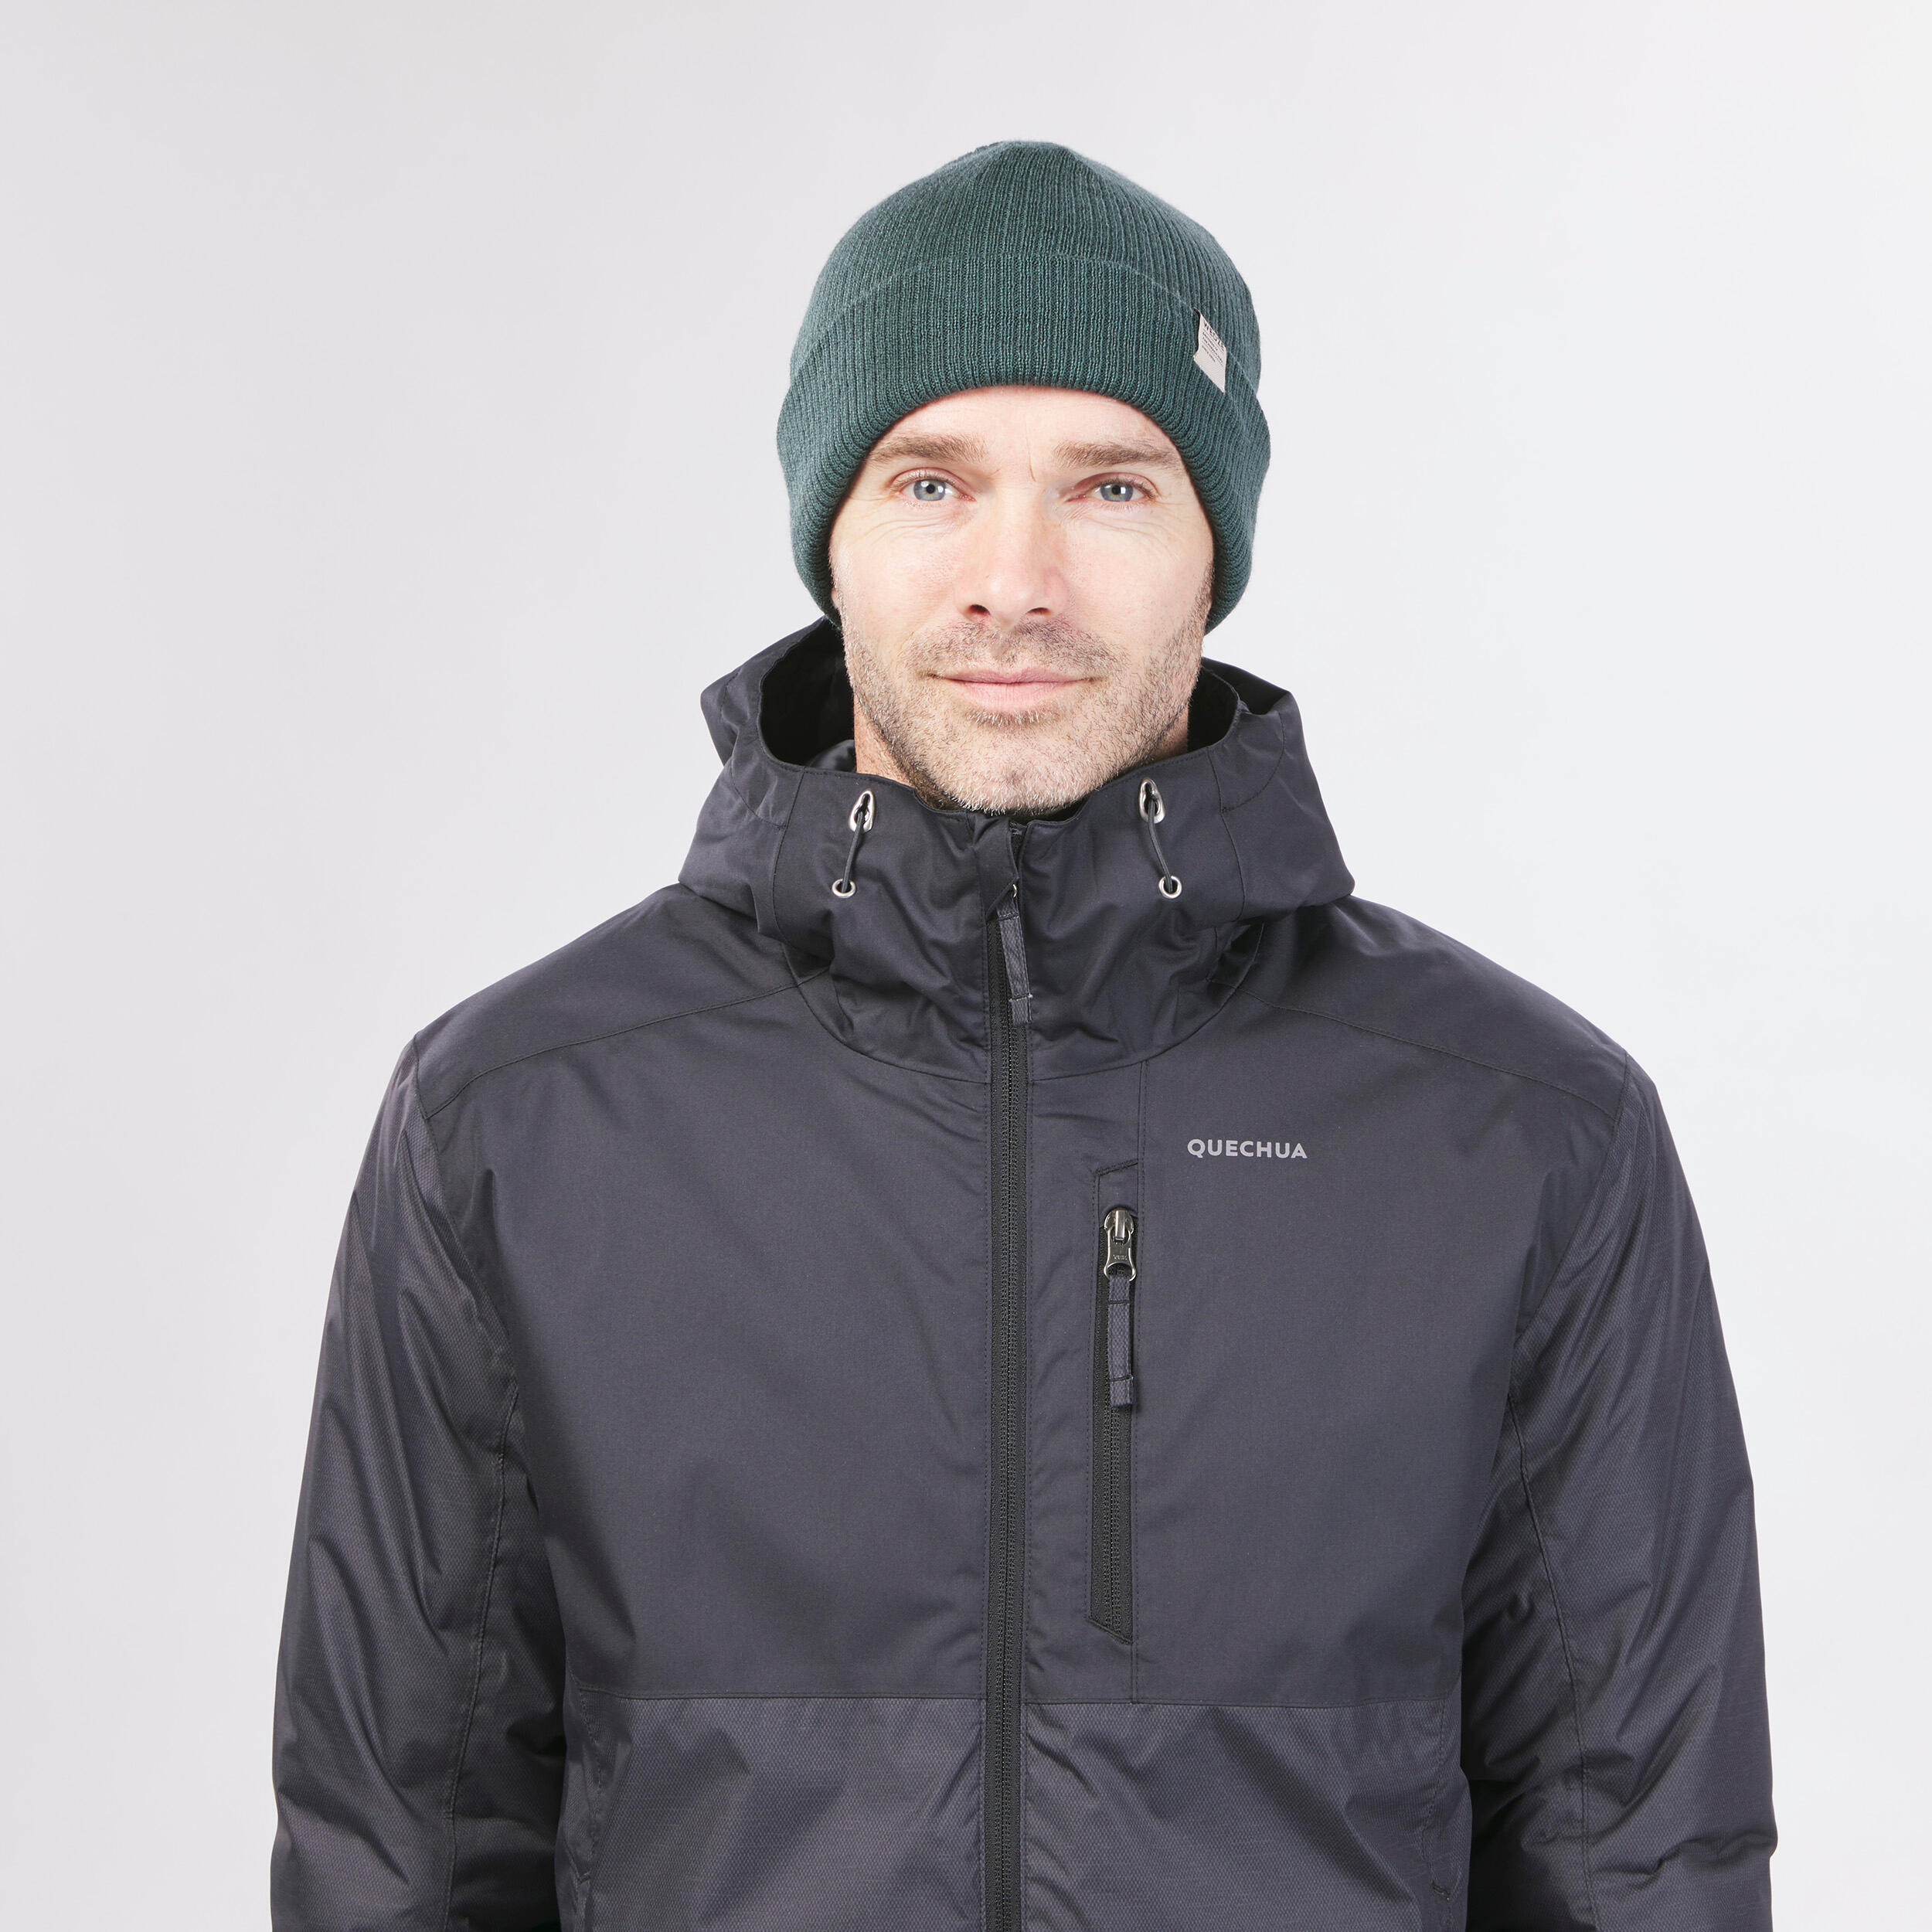 Men’s hiking waterproof winter jacket - SH500 -10°C 4/14